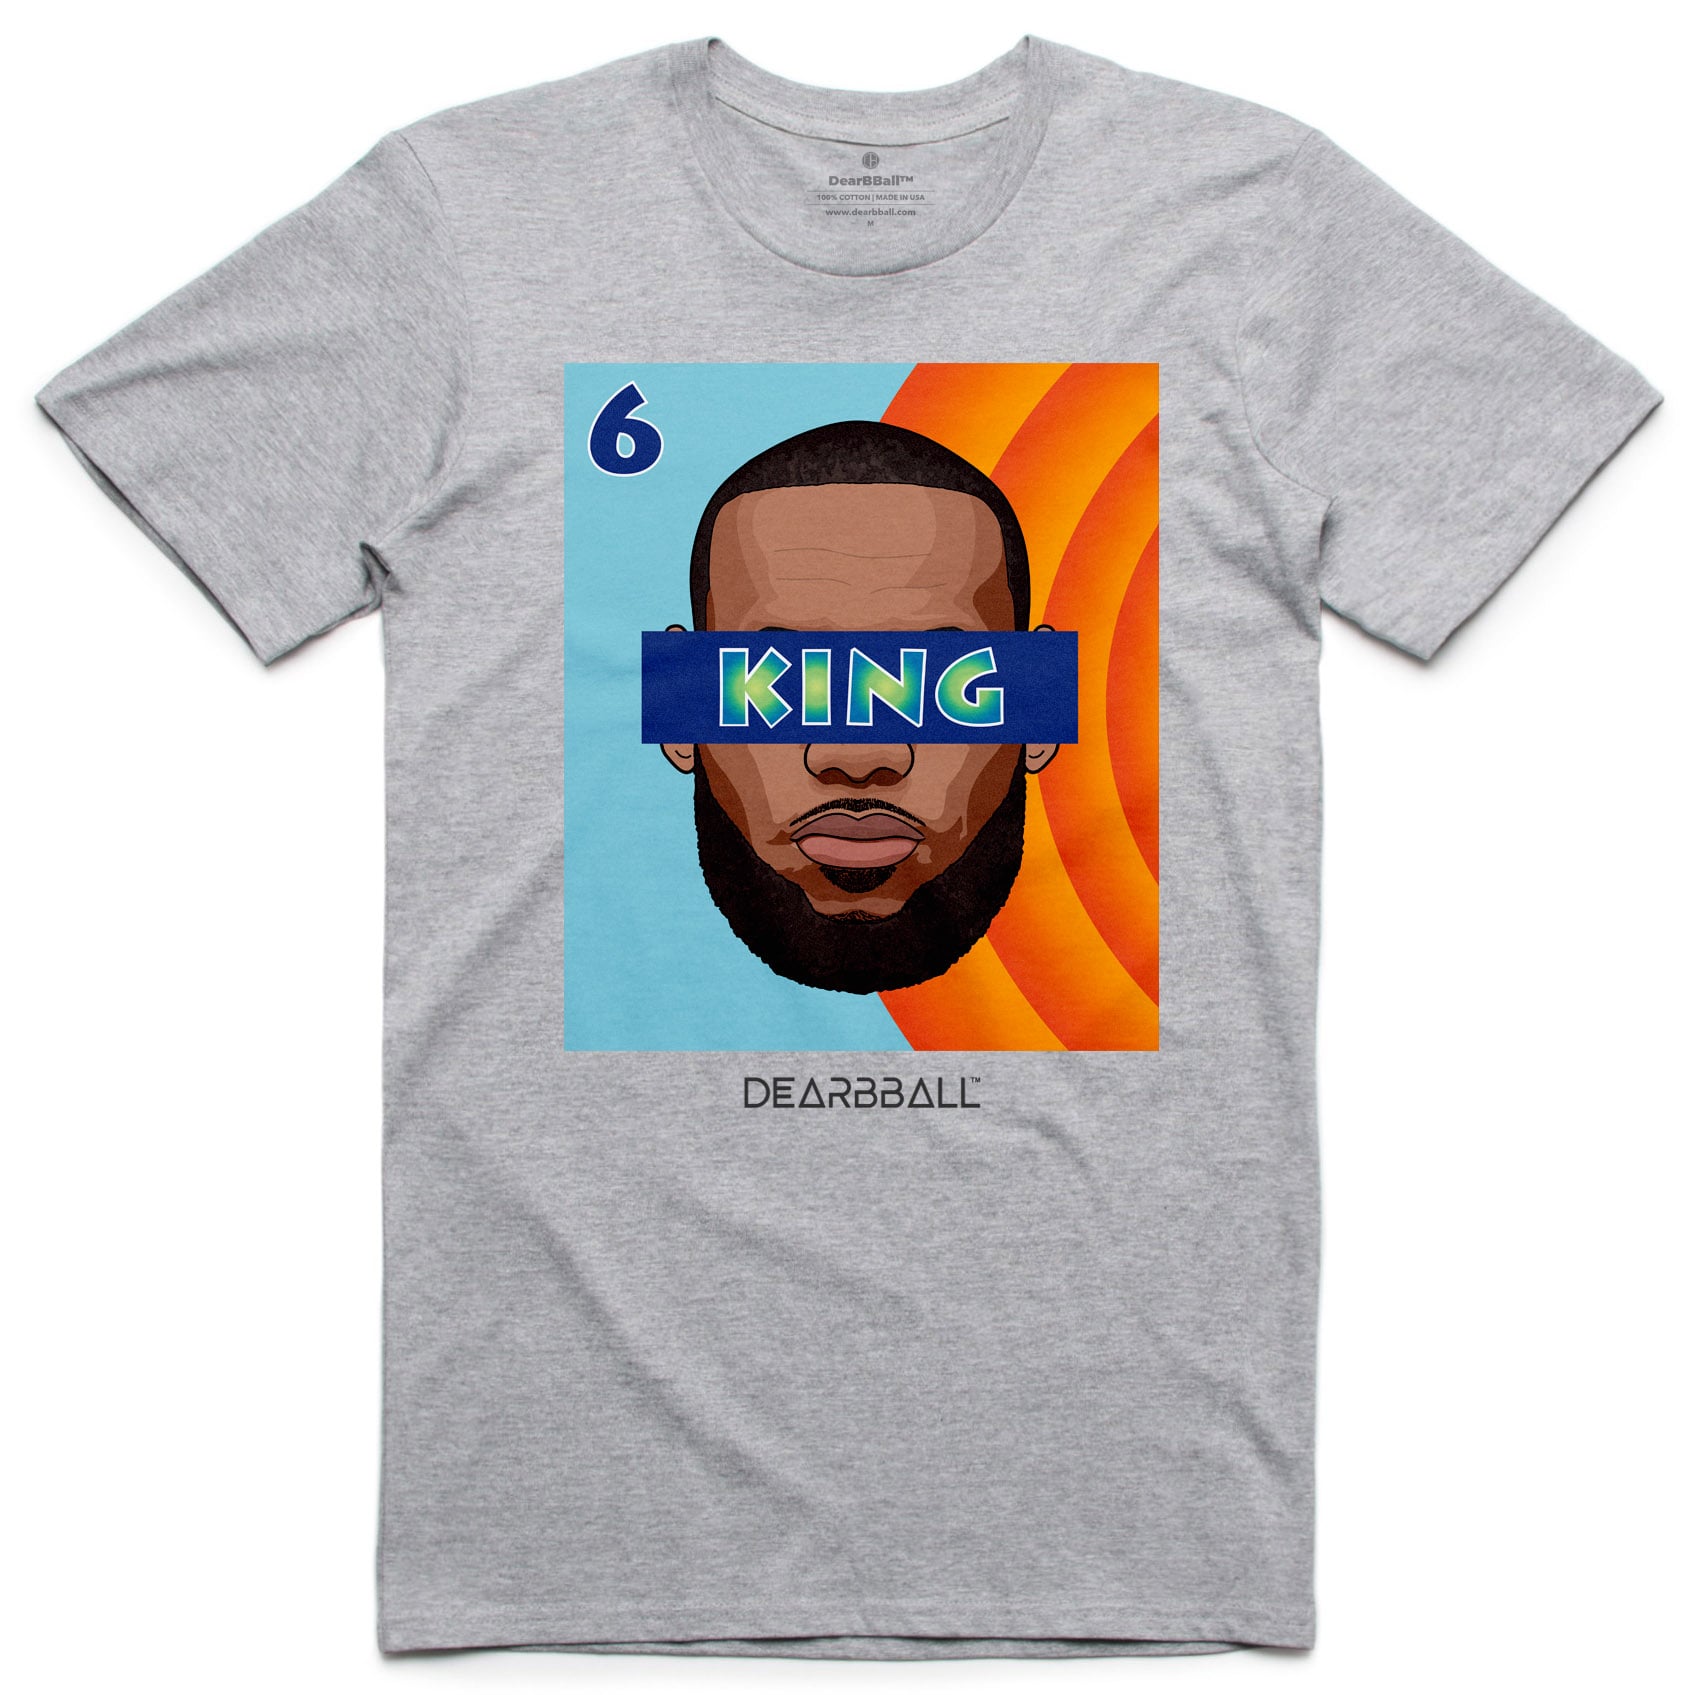 [NIÑO] Camiseta DearBBall - KING 6 Space Legacy